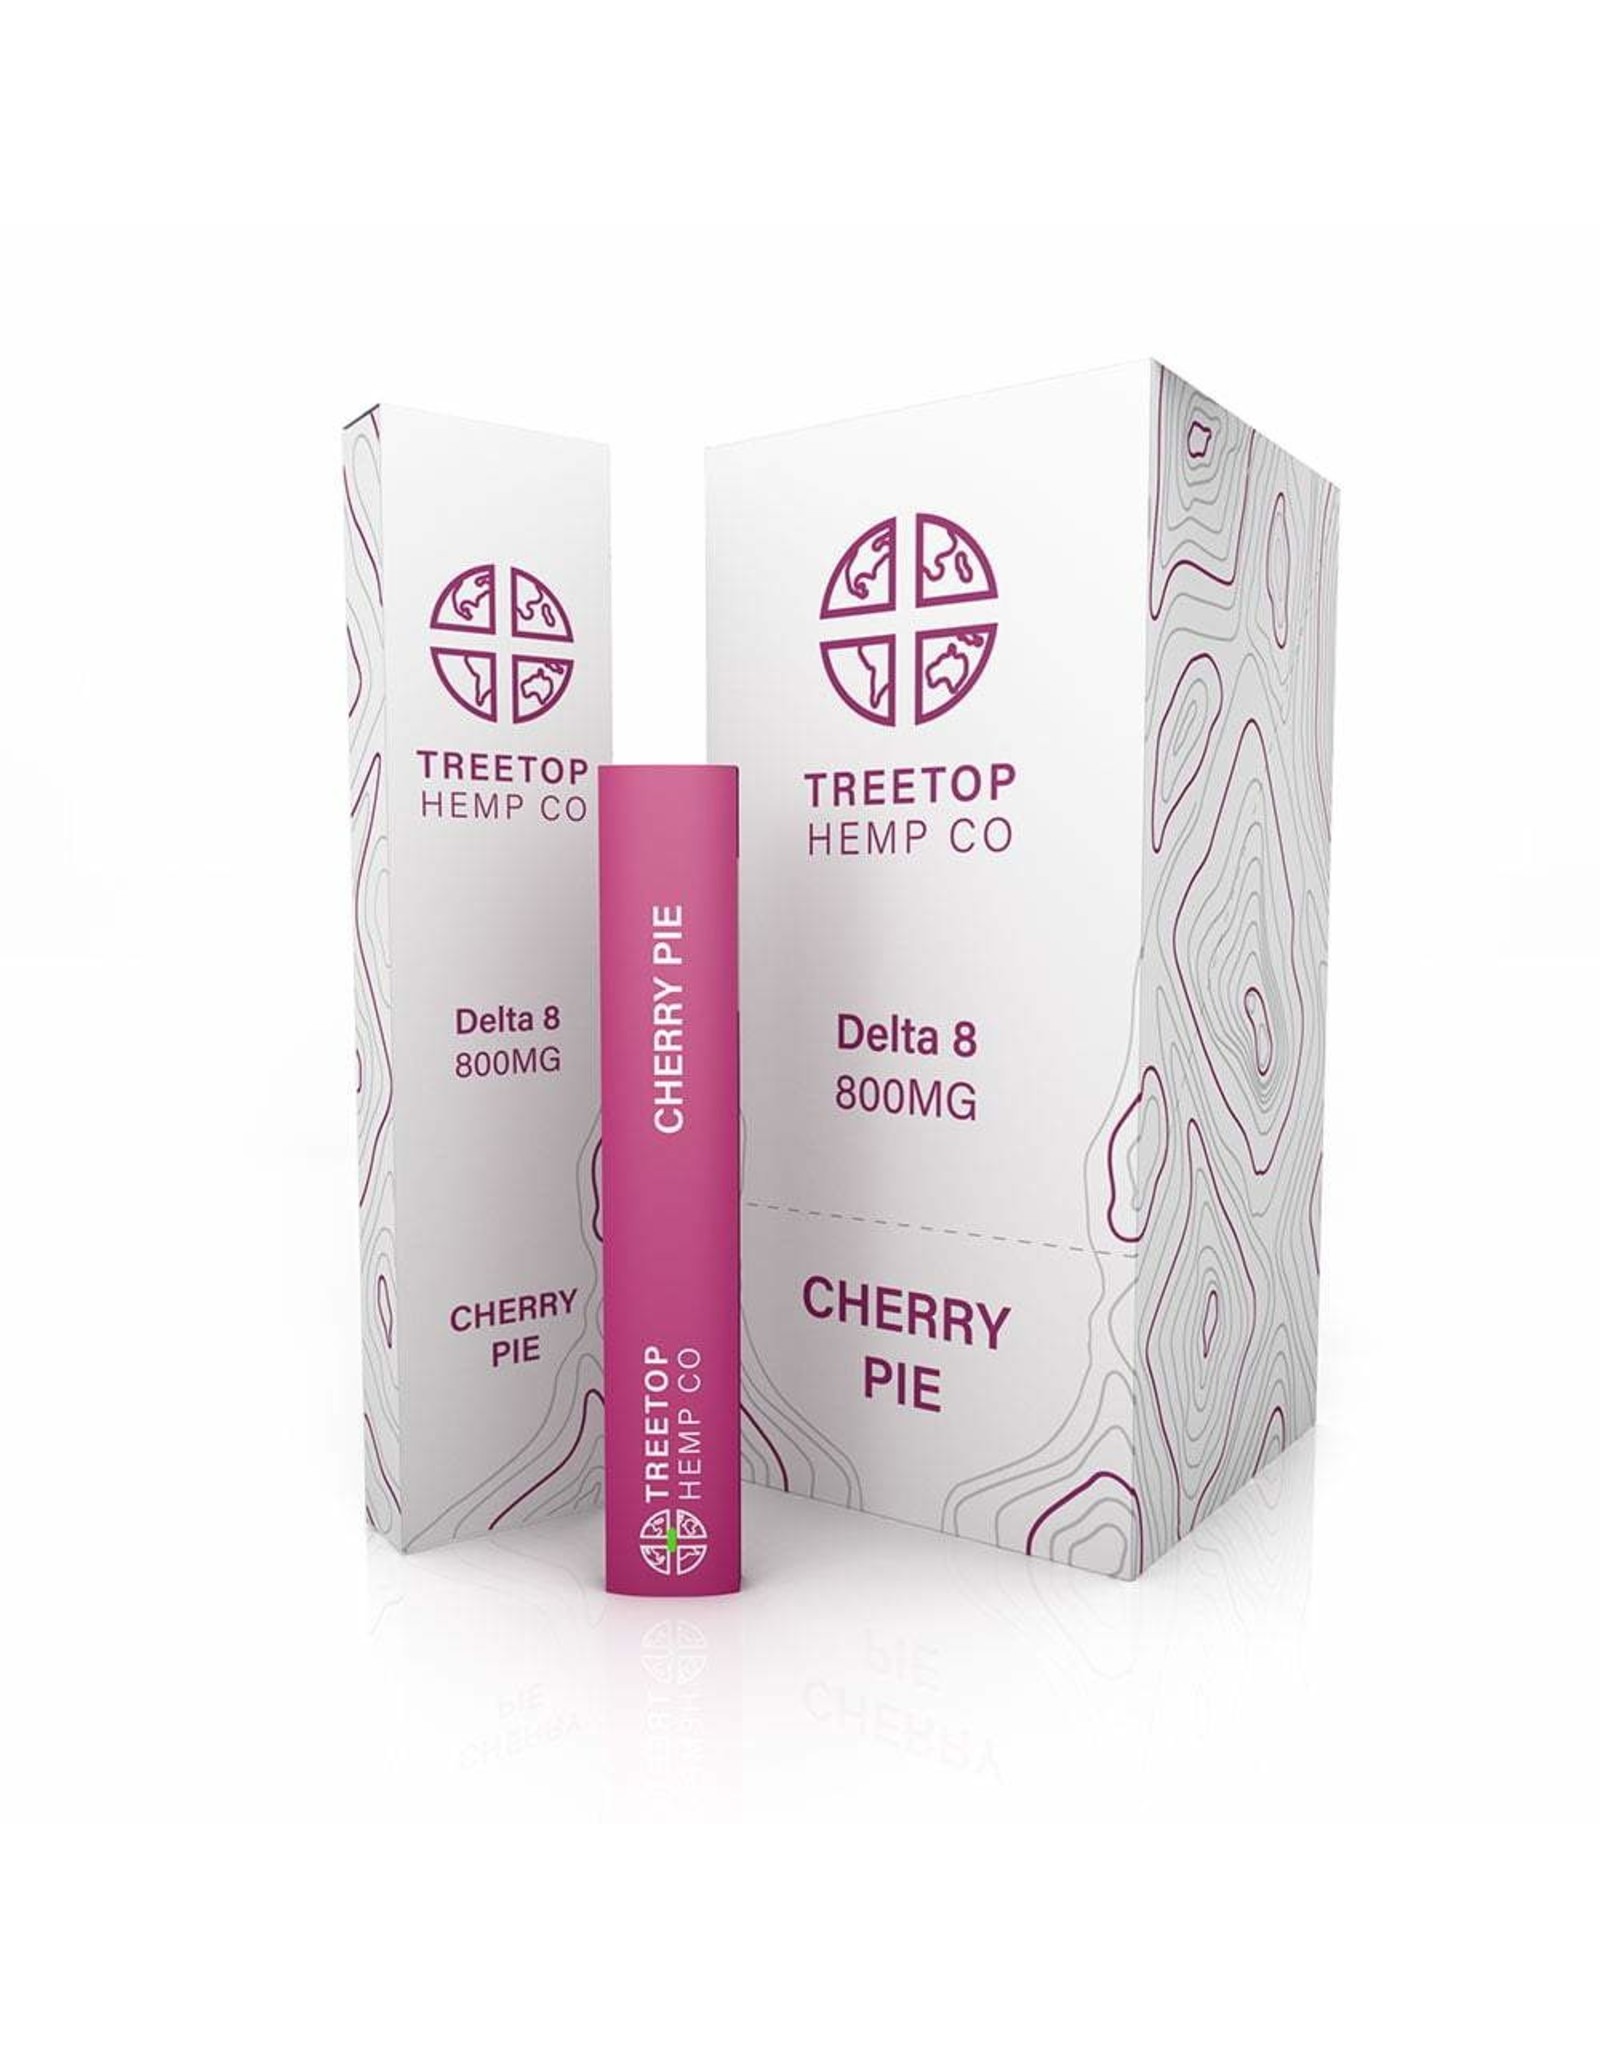 Treetop Hemp Co. TreeTop Hemp CO. 800MG Delta 8 Cherry Pie Disposable